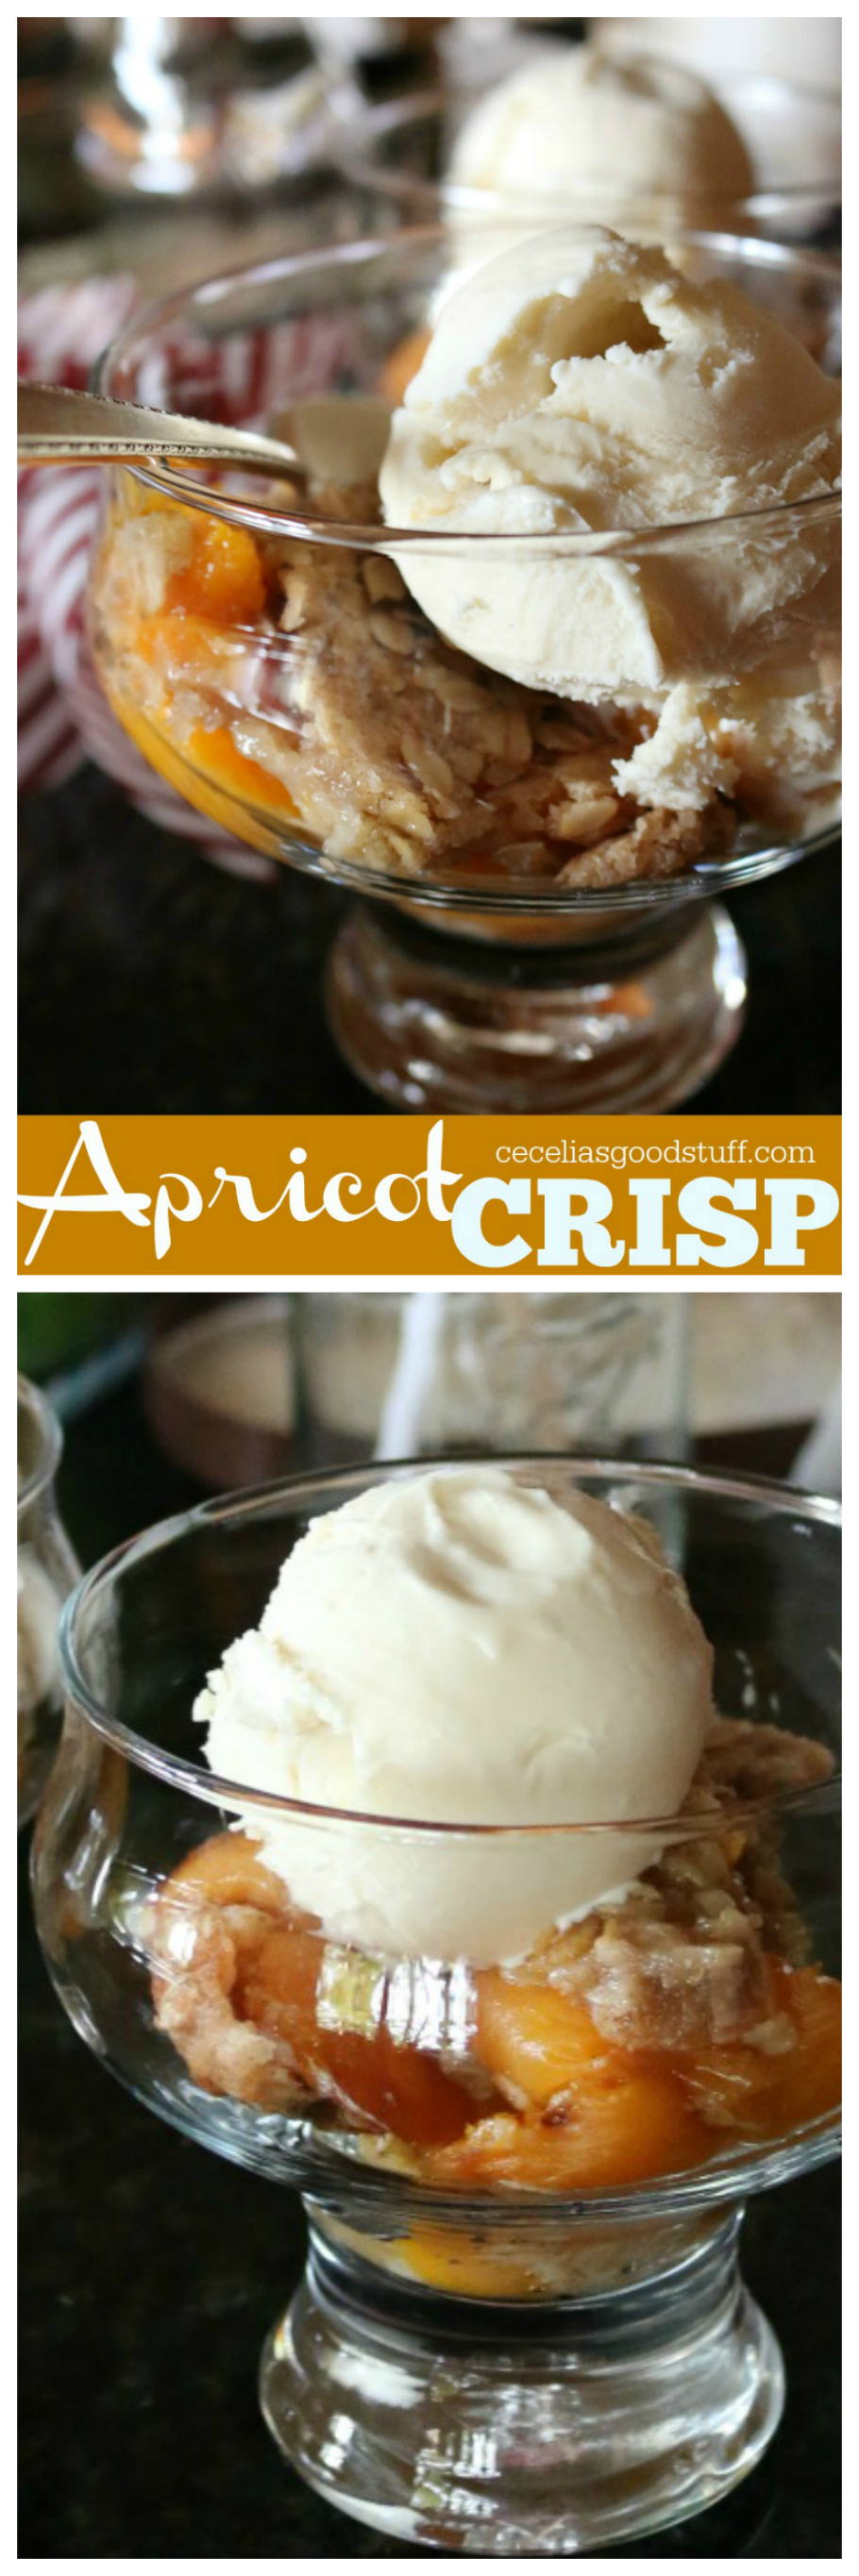 A favorite summer recipe for Apricot Crisp | CeceliasGoodStuff.com | Good Food for Good People